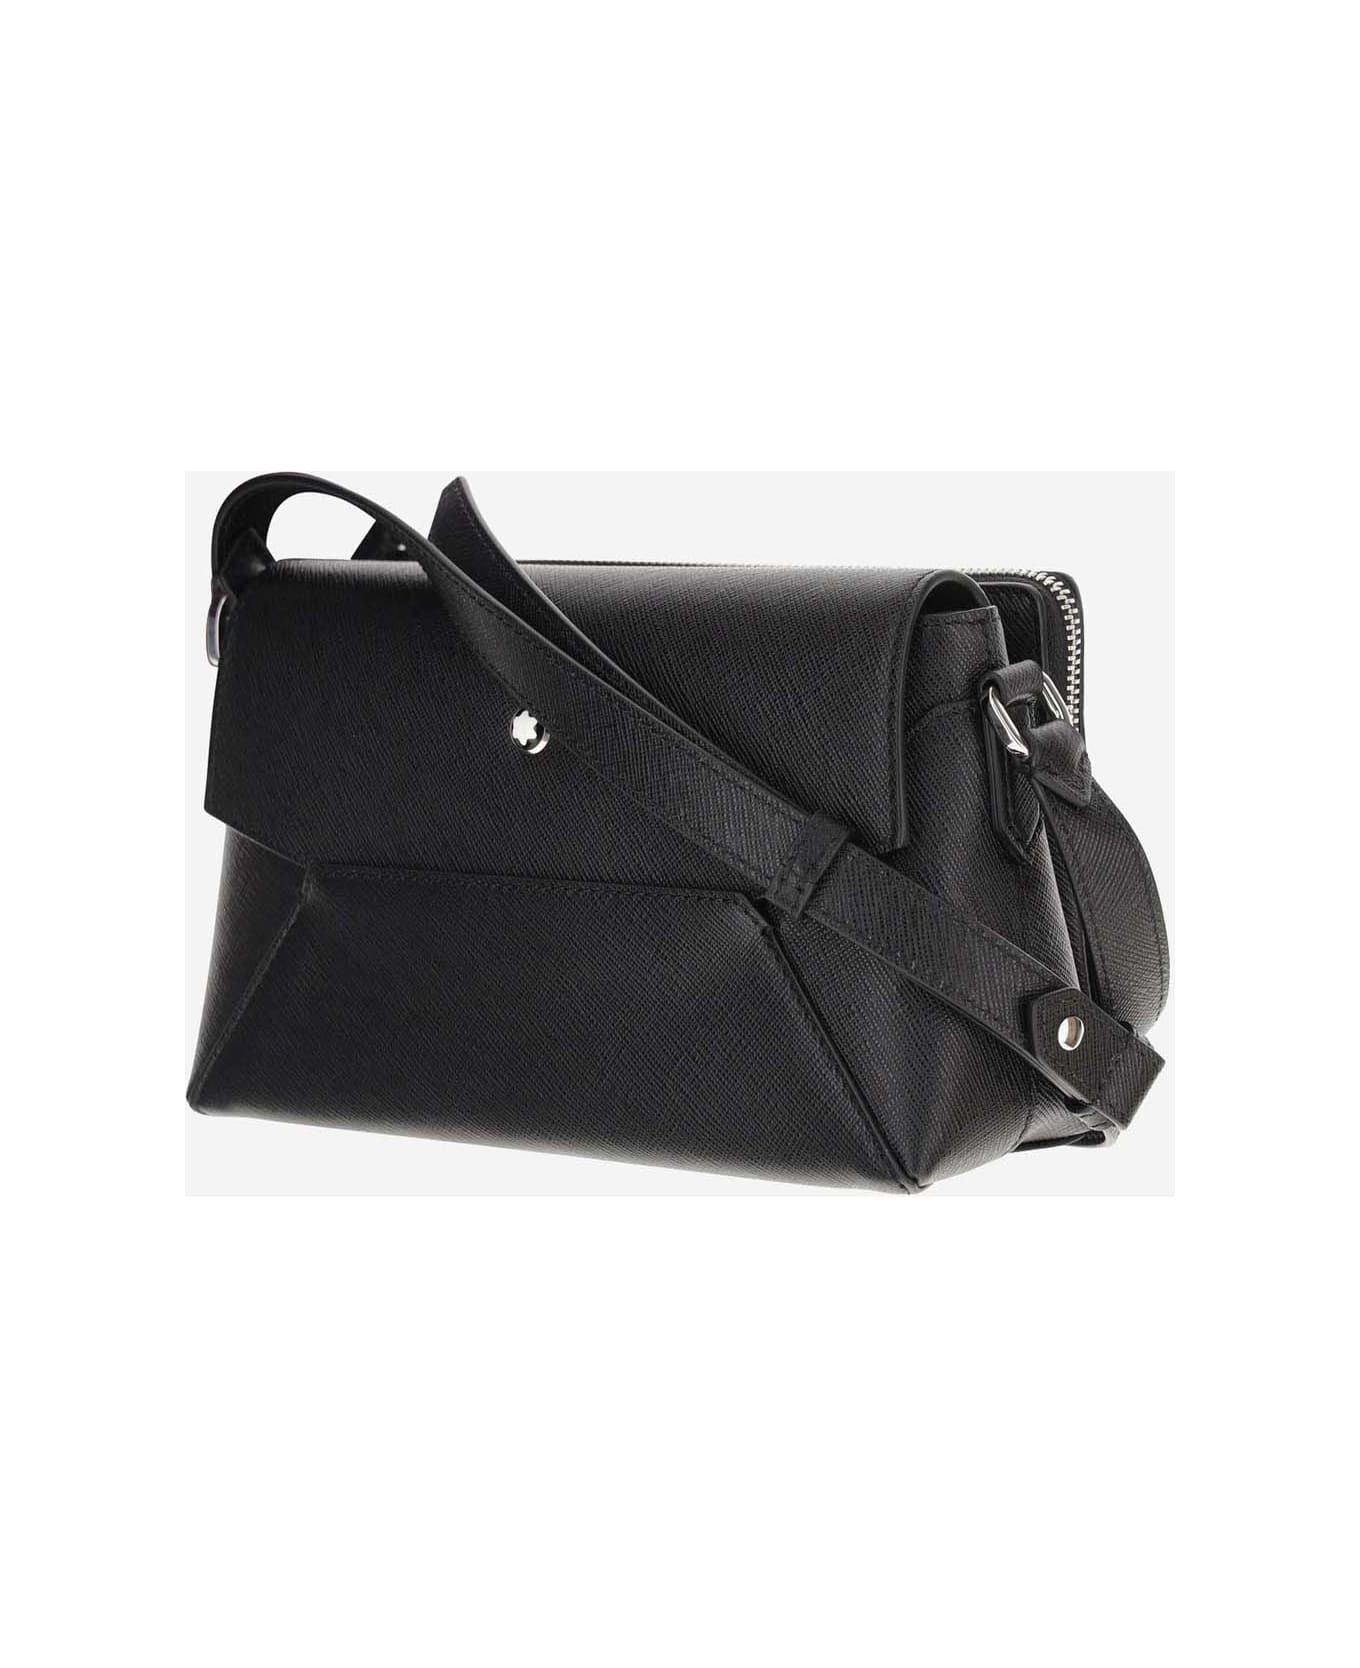 Montblanc Small Double Sartorial Bag - Black ショルダーバッグ